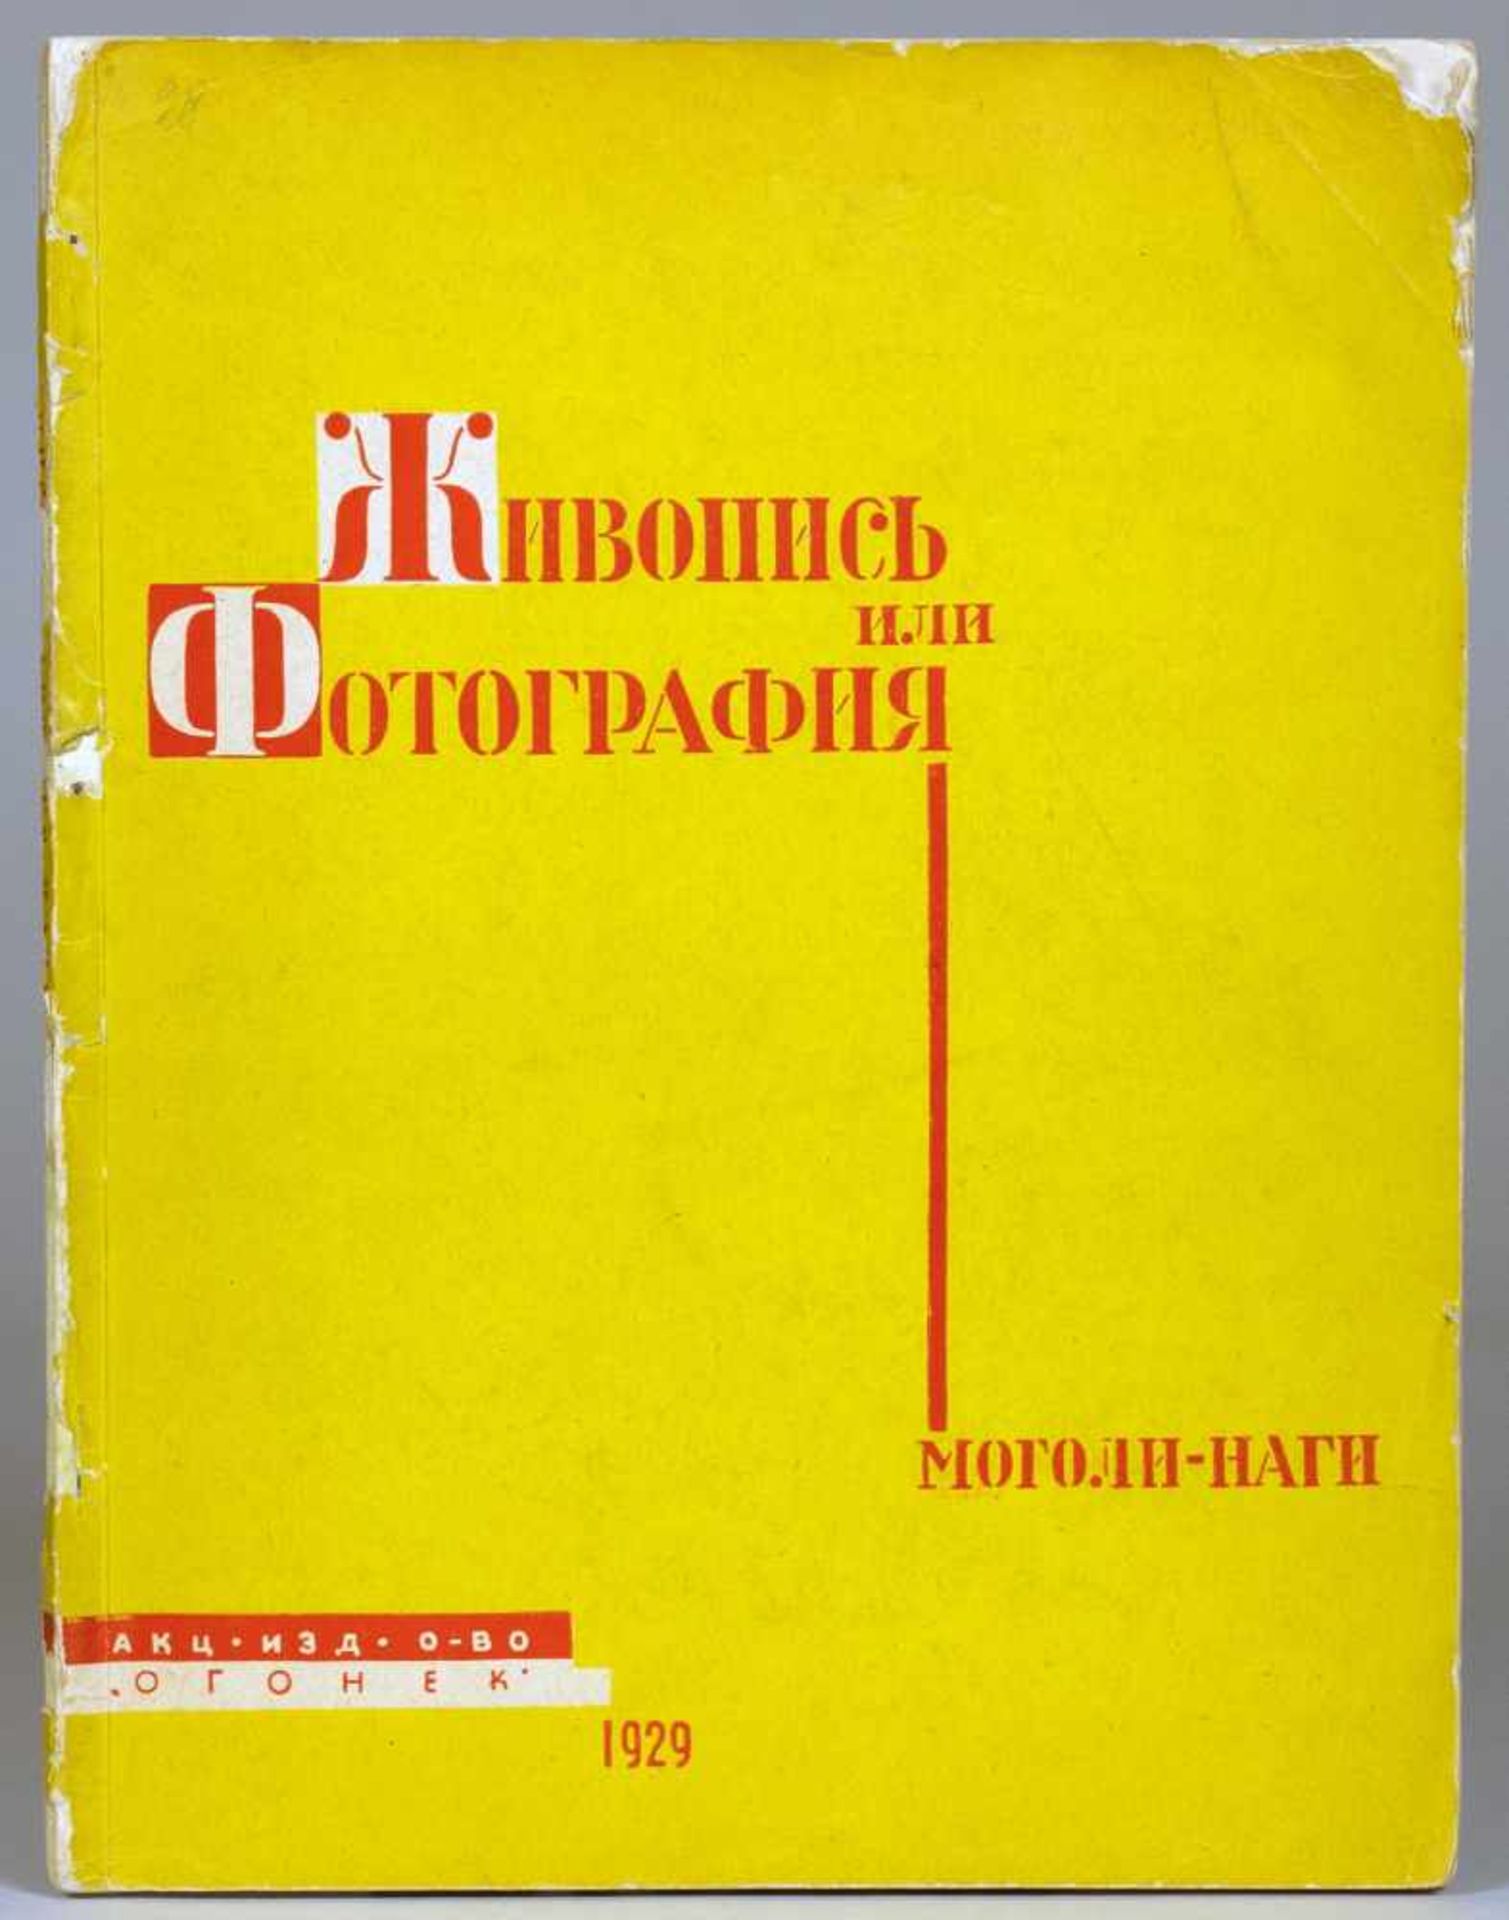 Bauhaus - L[aszlo] Moholy-Nagy. Schiwobis ili fotografija (russisch: Malerei und Fotografie).